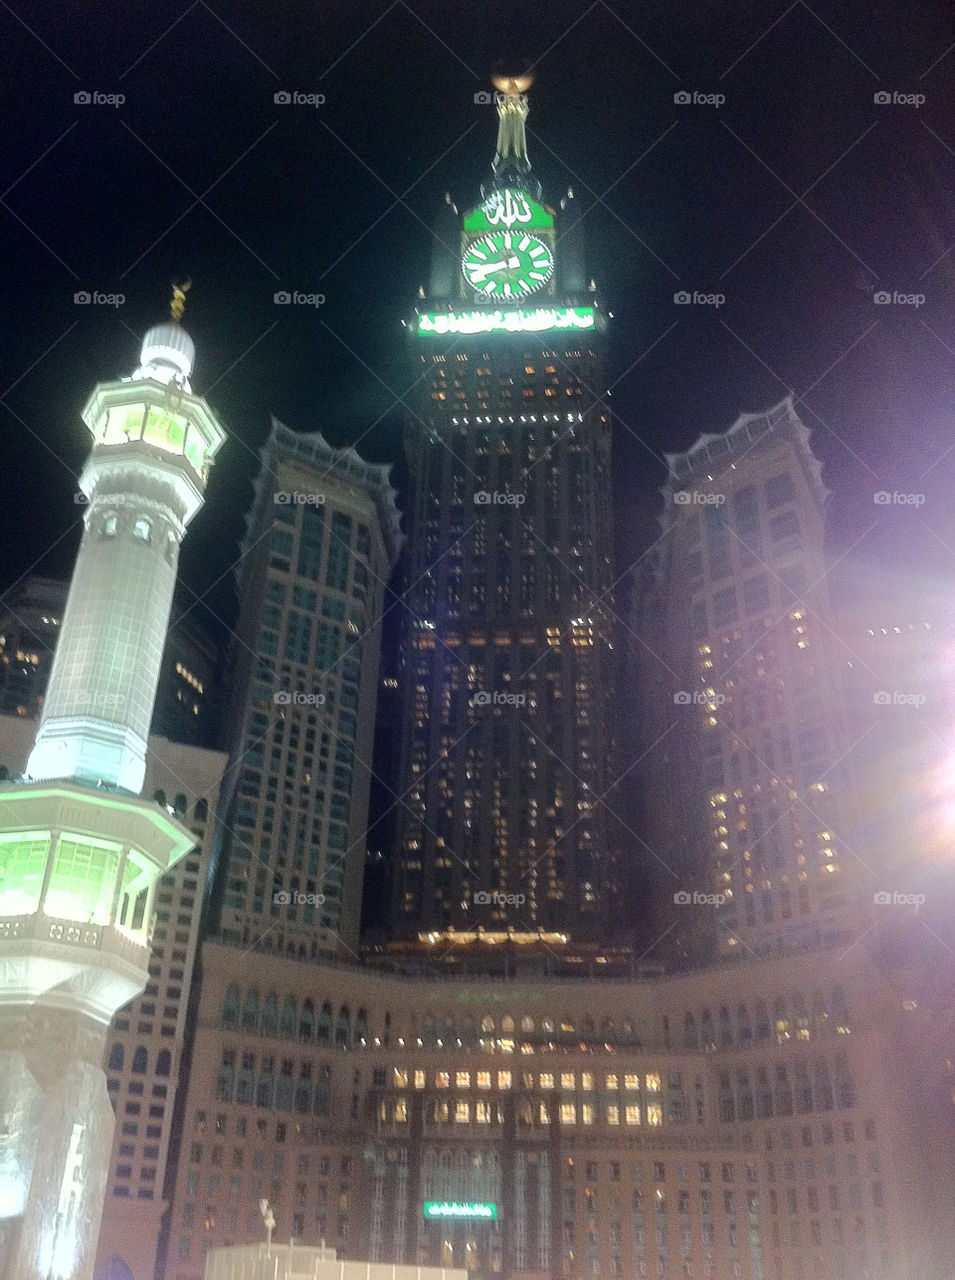 Clock tower in makkah